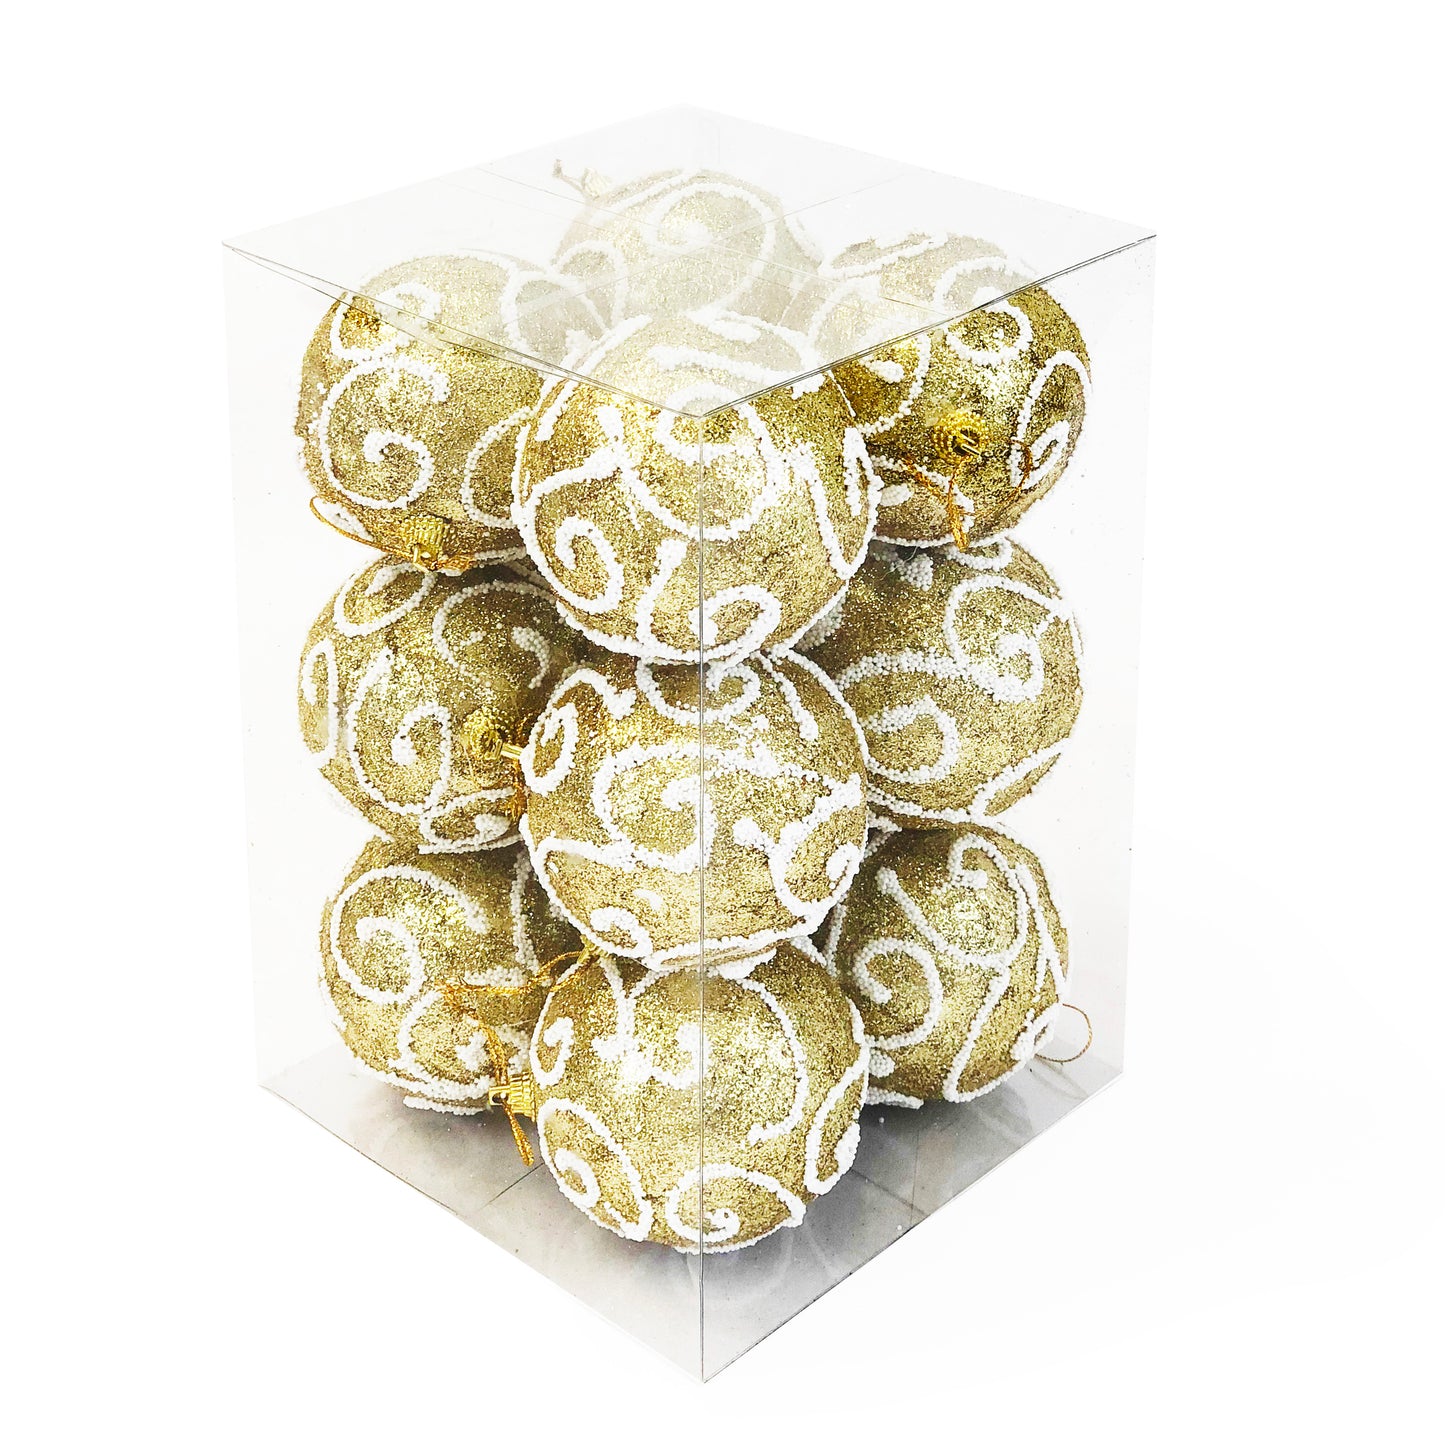 Allgala Christmas Ornament Balls 12 Pack 3 Inch - Glitter Decorated Foam